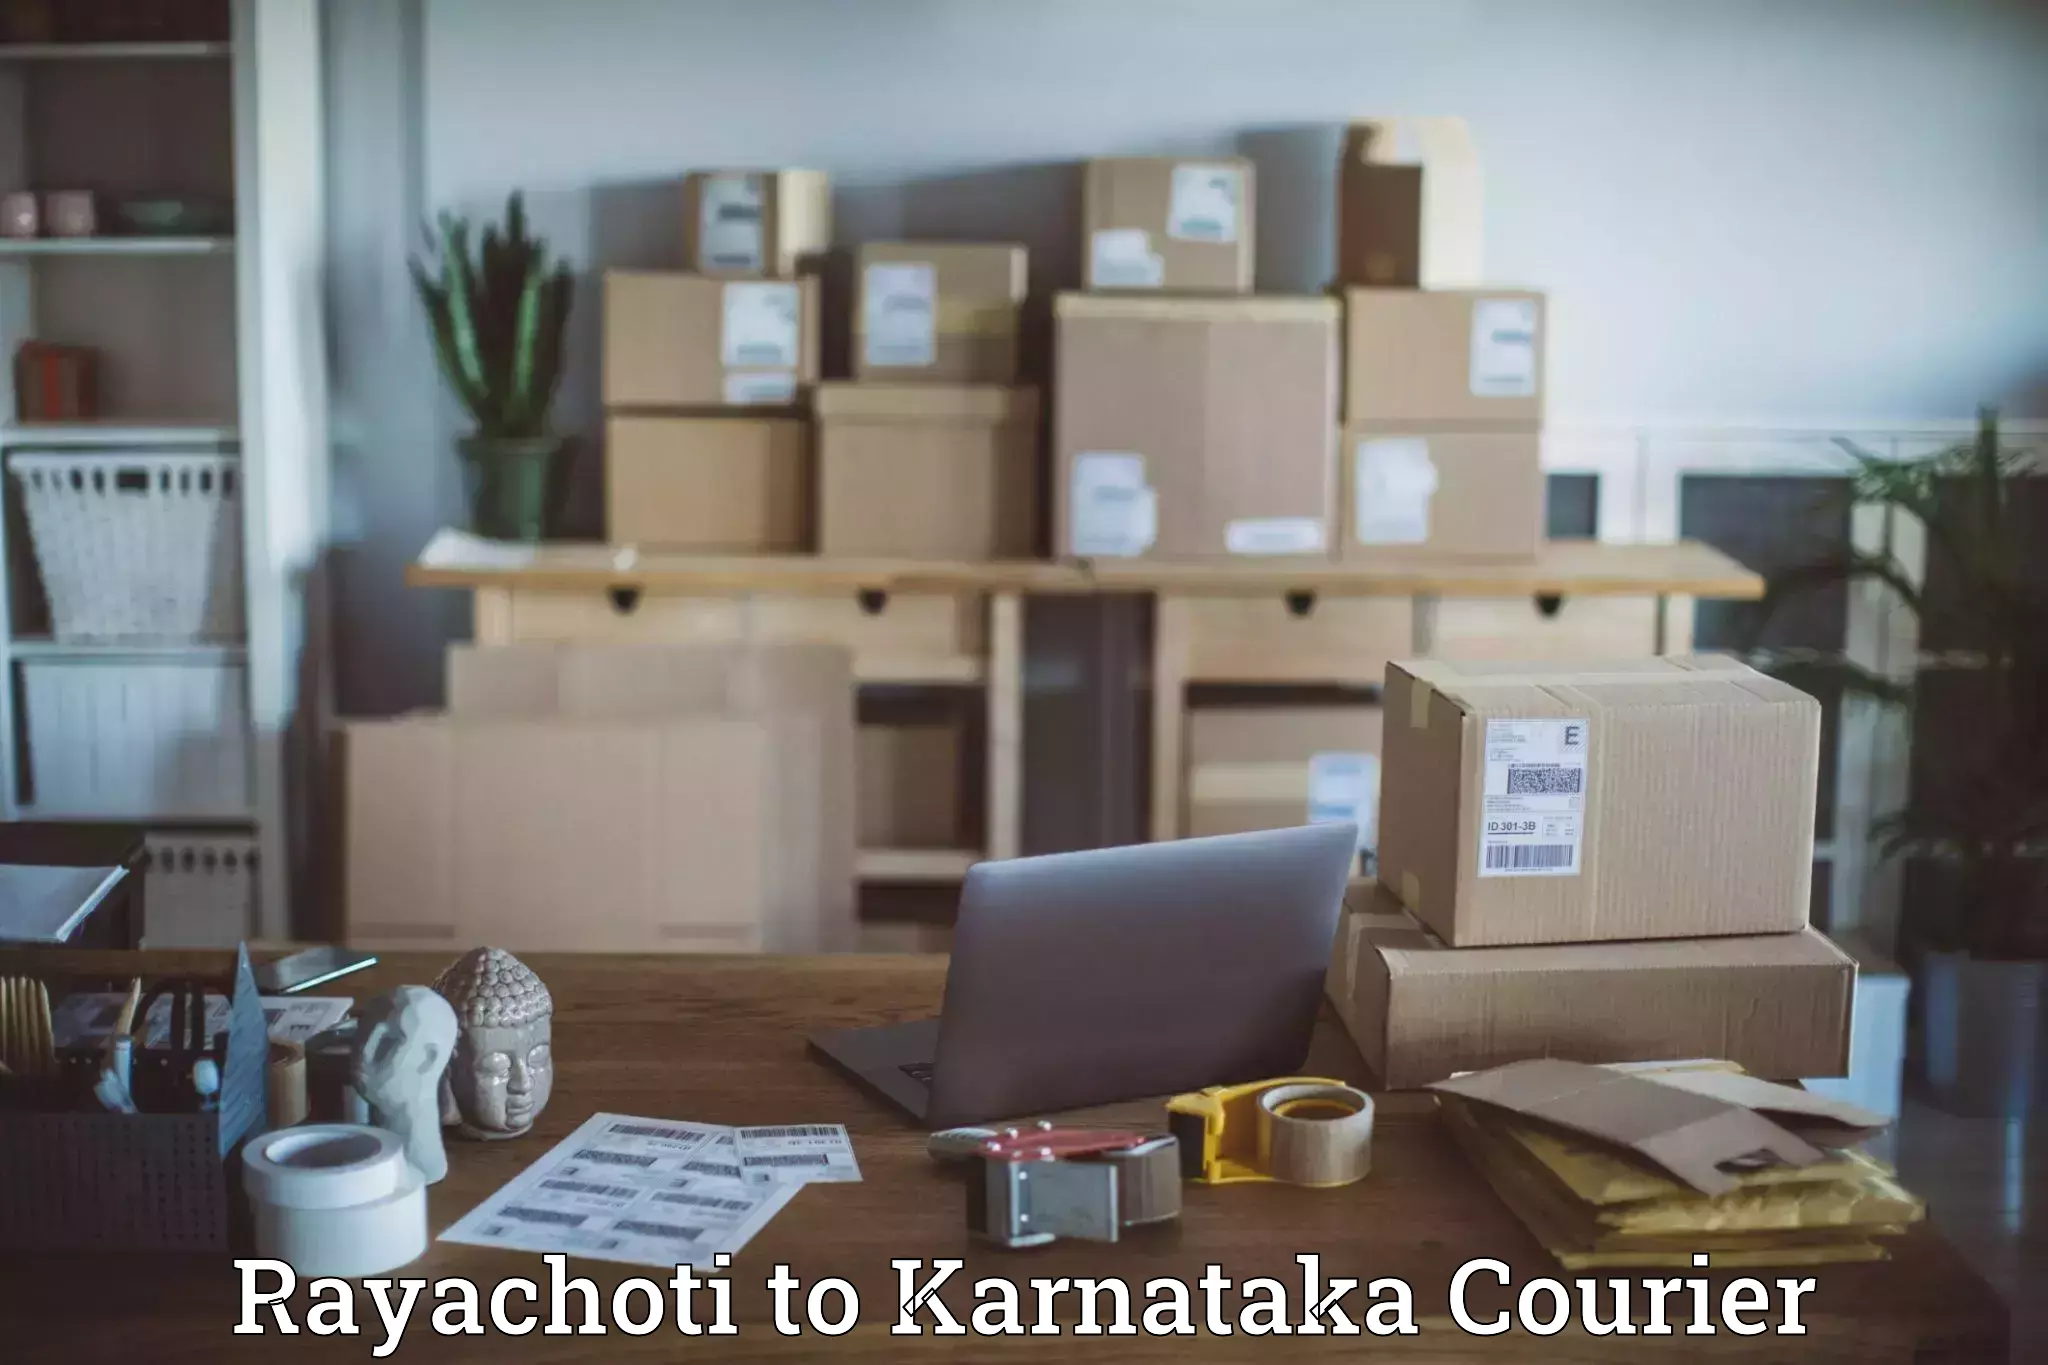 Business delivery service Rayachoti to Hagaribommanahalli